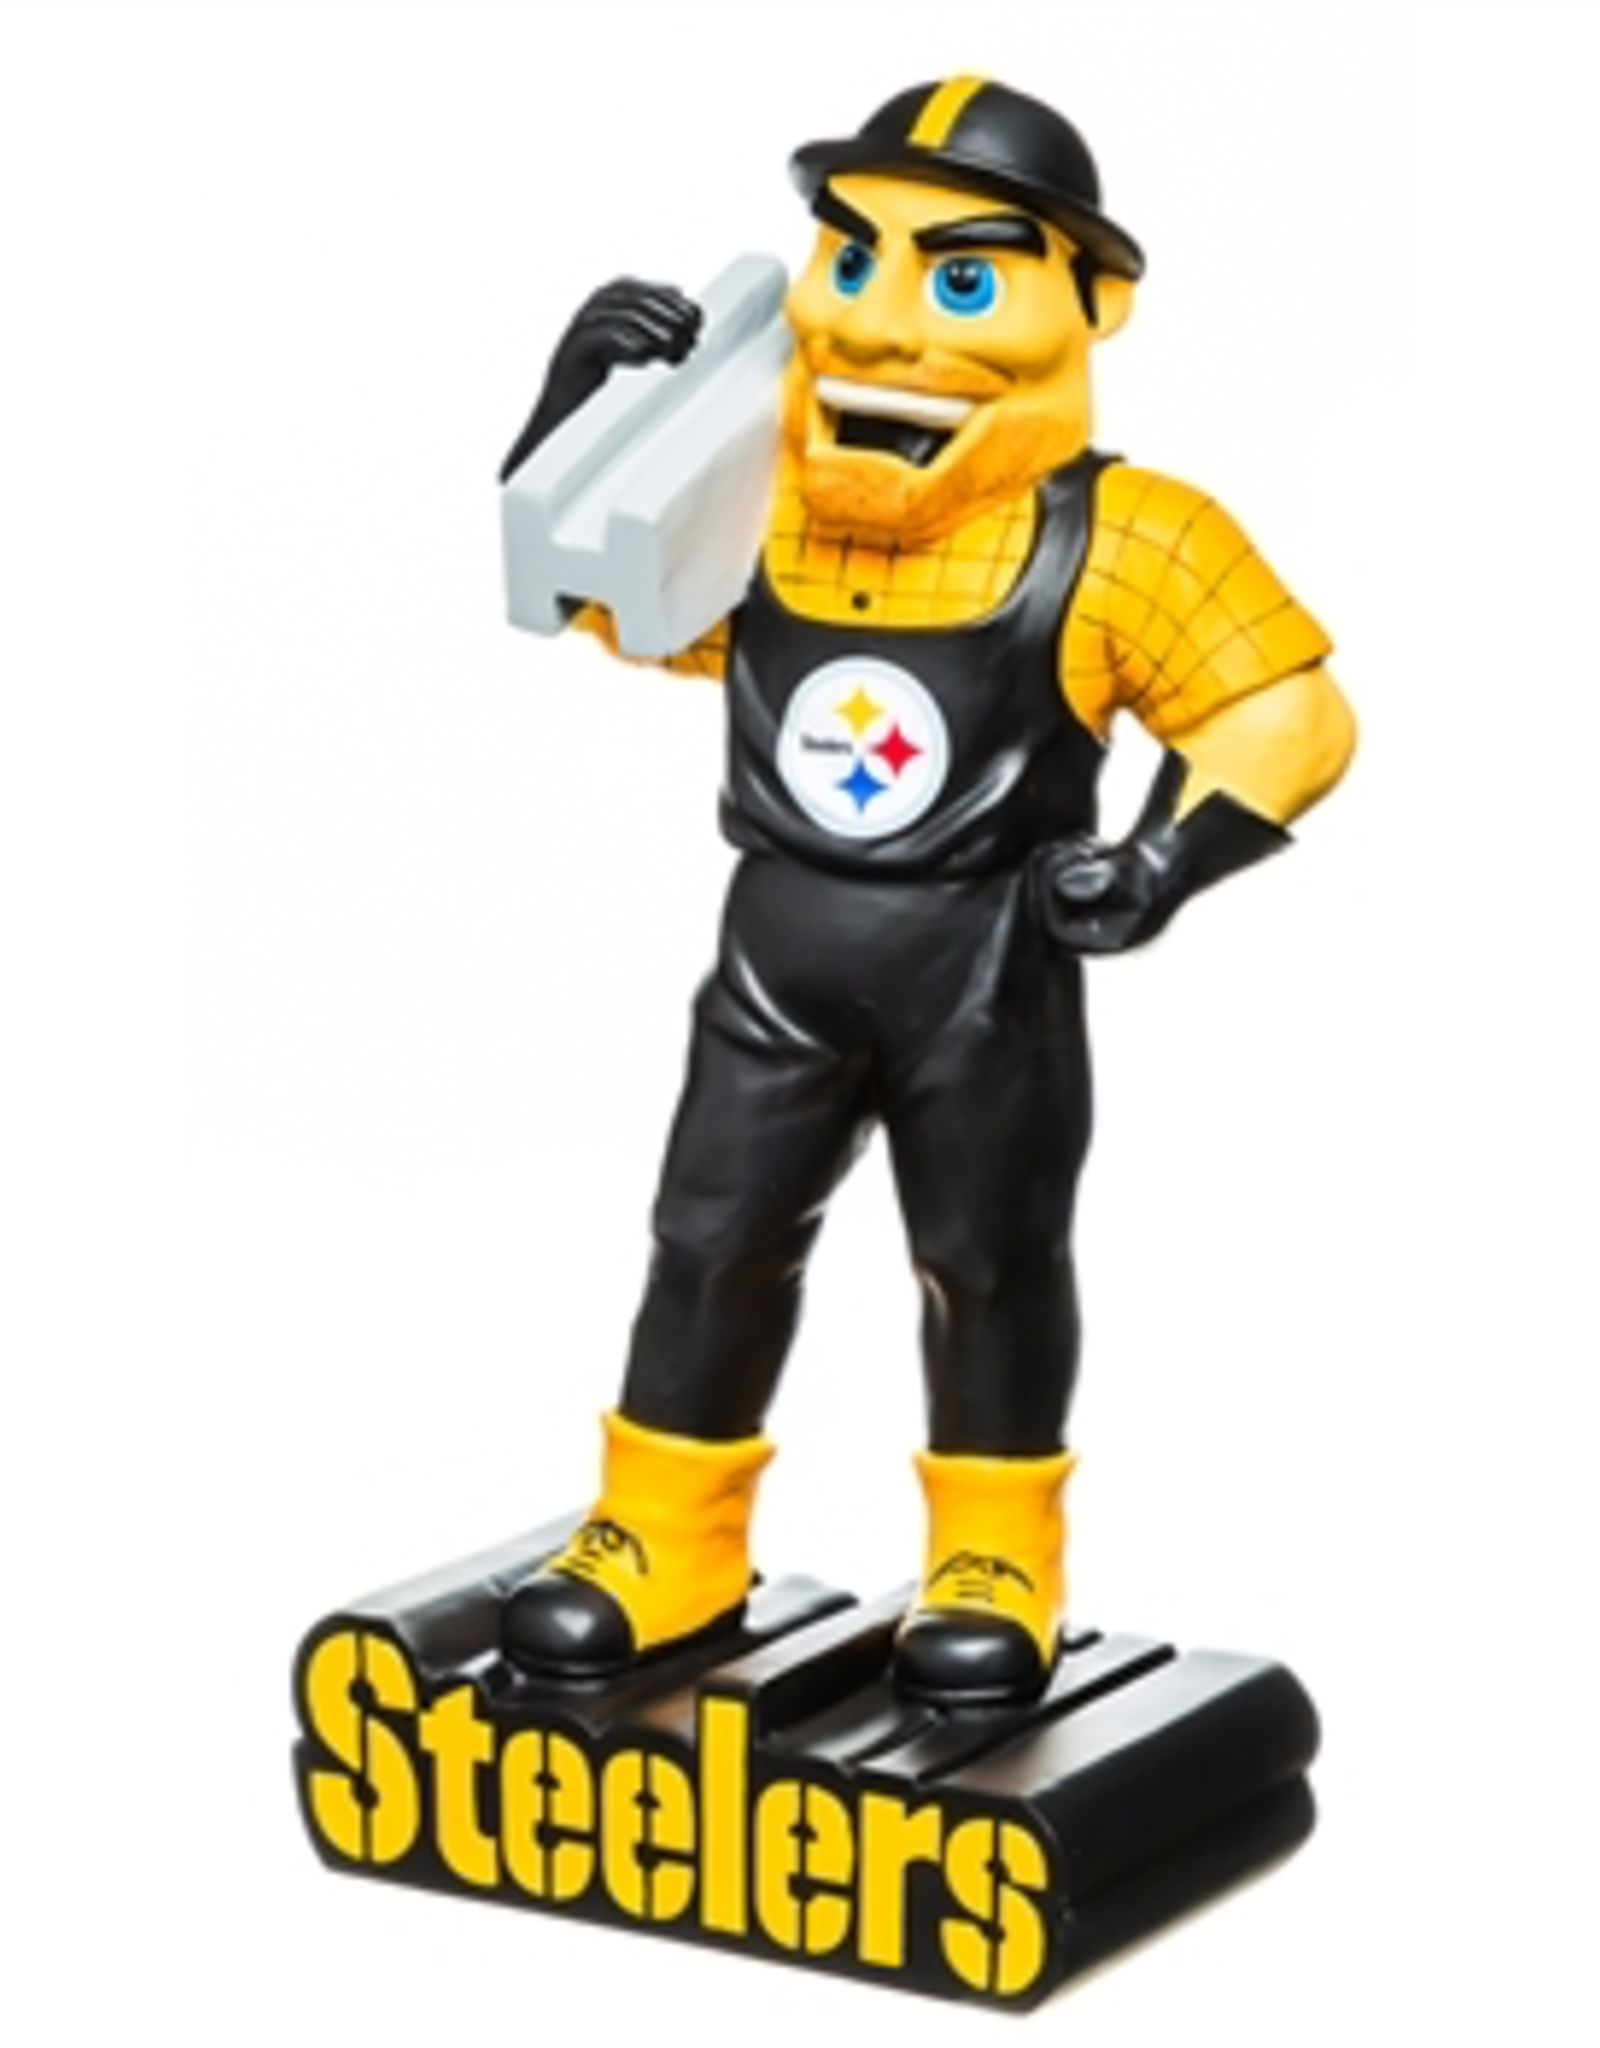 EVERGREEN Pittsburgh Steelers Mascot Statue